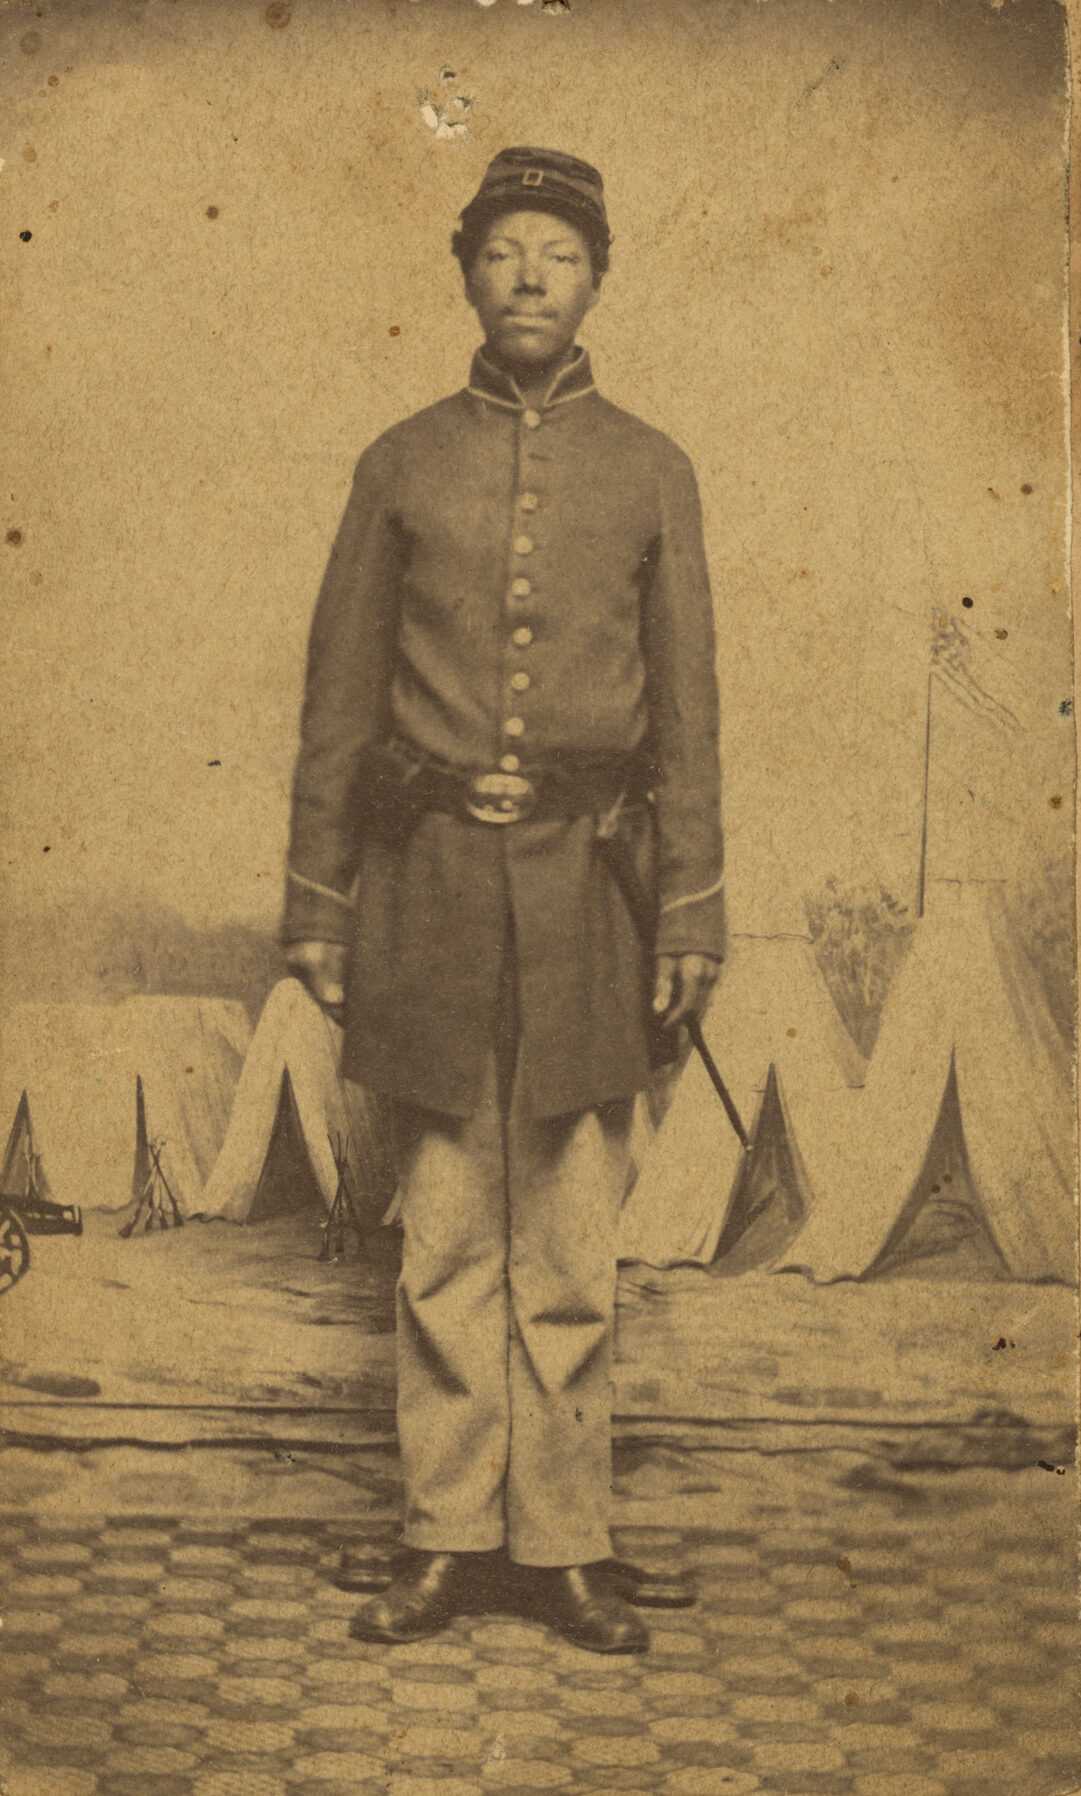 Photograph of John Sharper, Union Soldier